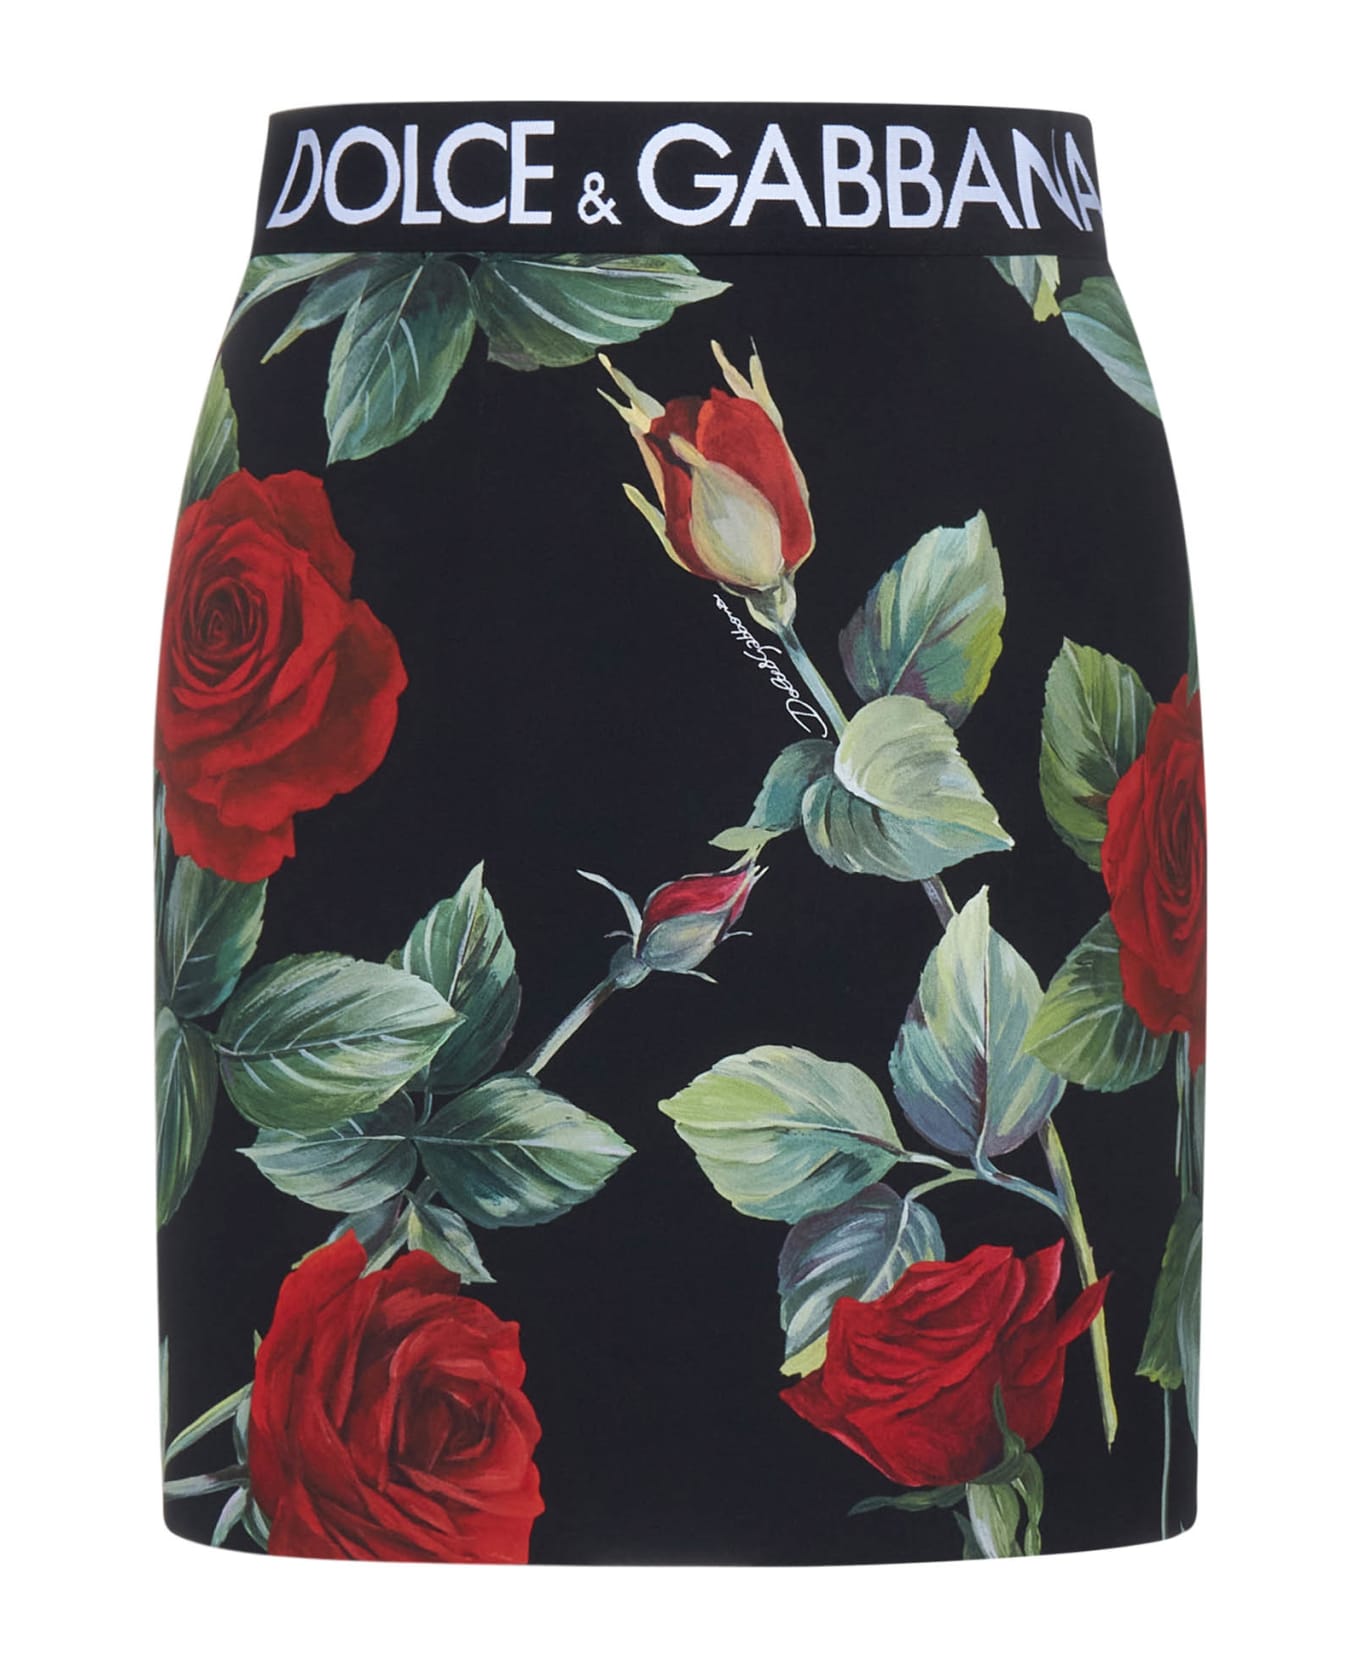 Dolce & Gabbana Skirt - Rose fdo nero